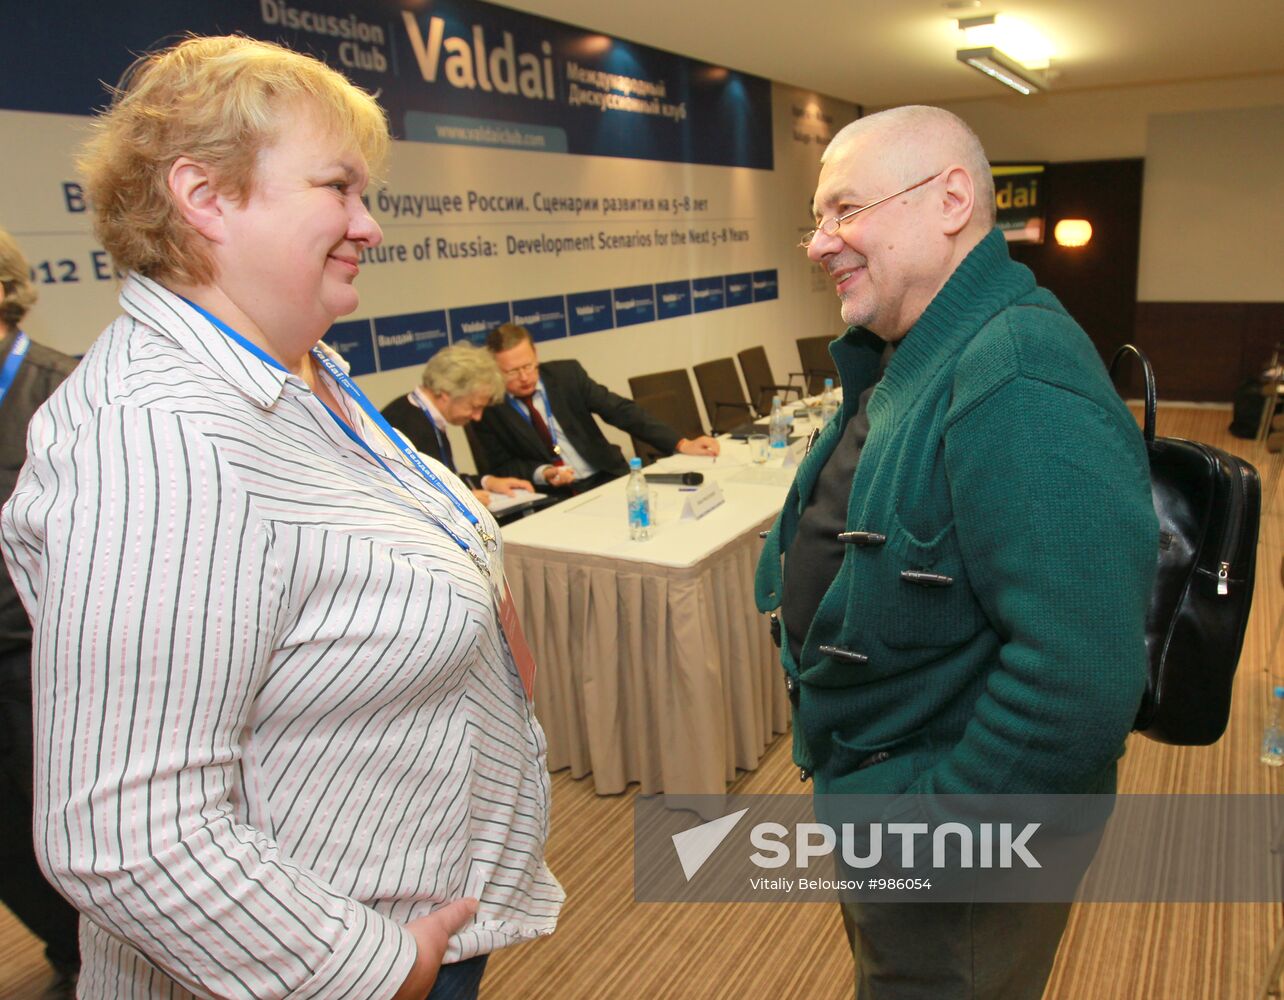 8th Valdai International Discussion Club meeting.